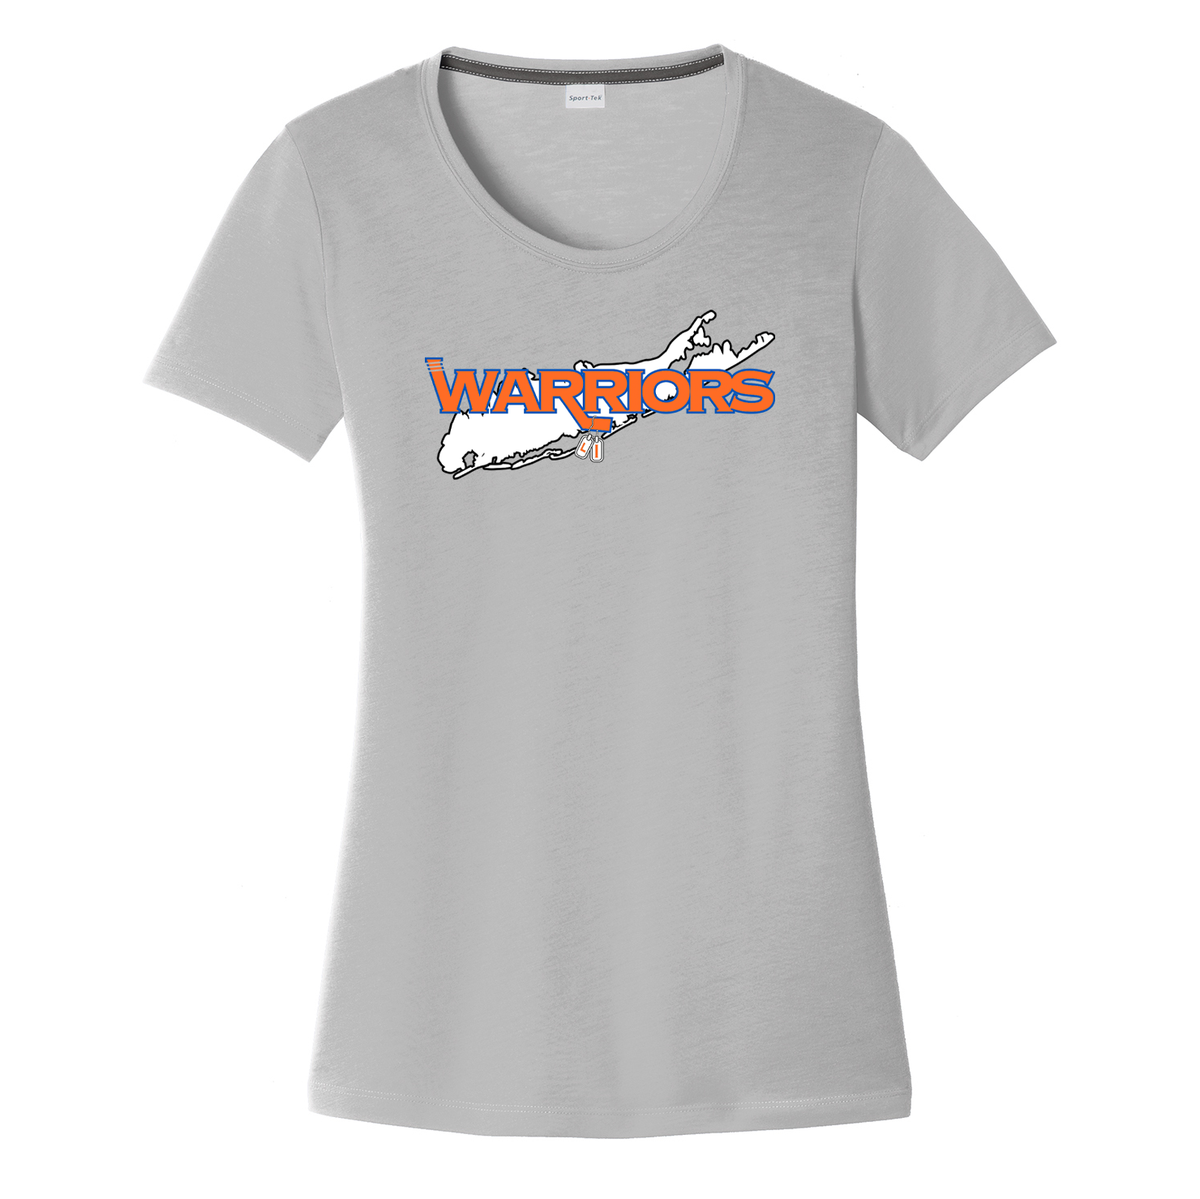 LI Warriors Hockey Club Women's CottonTouch Performance T-Shirt